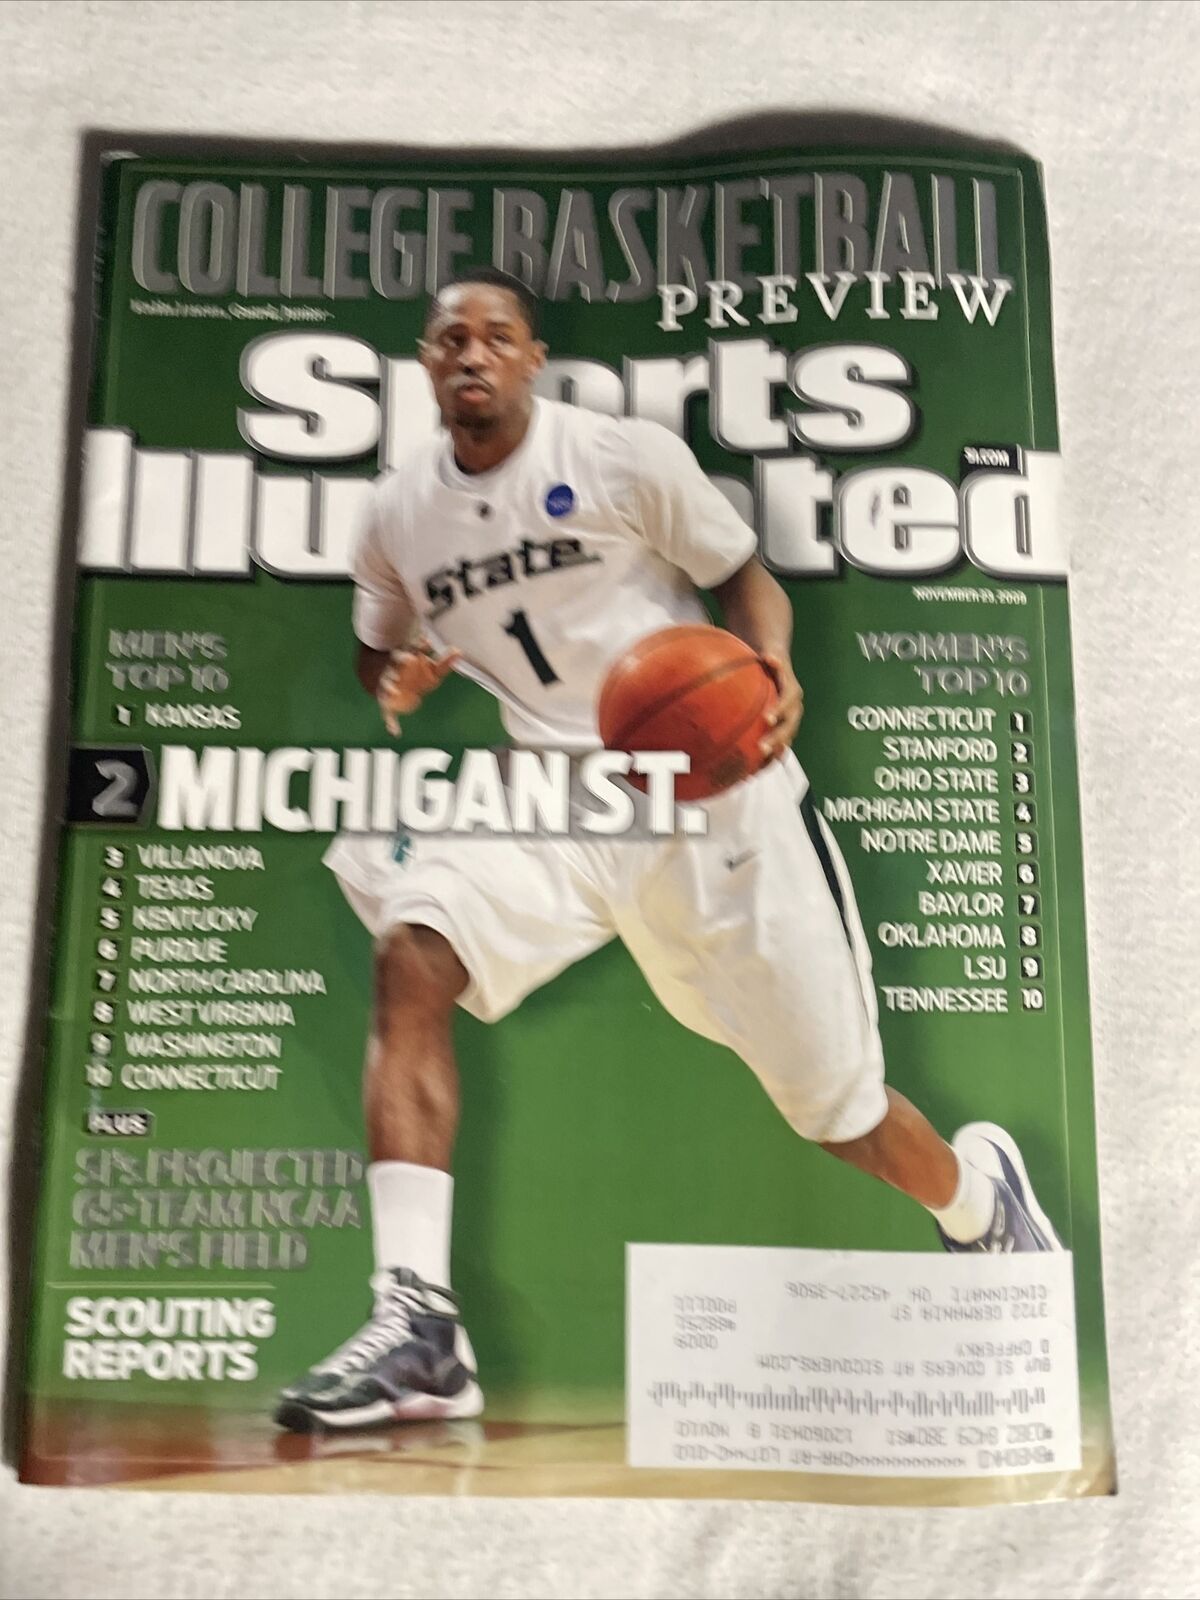 2009 November 23 Sports Illustrated Magazine, College basketball   (CP246)